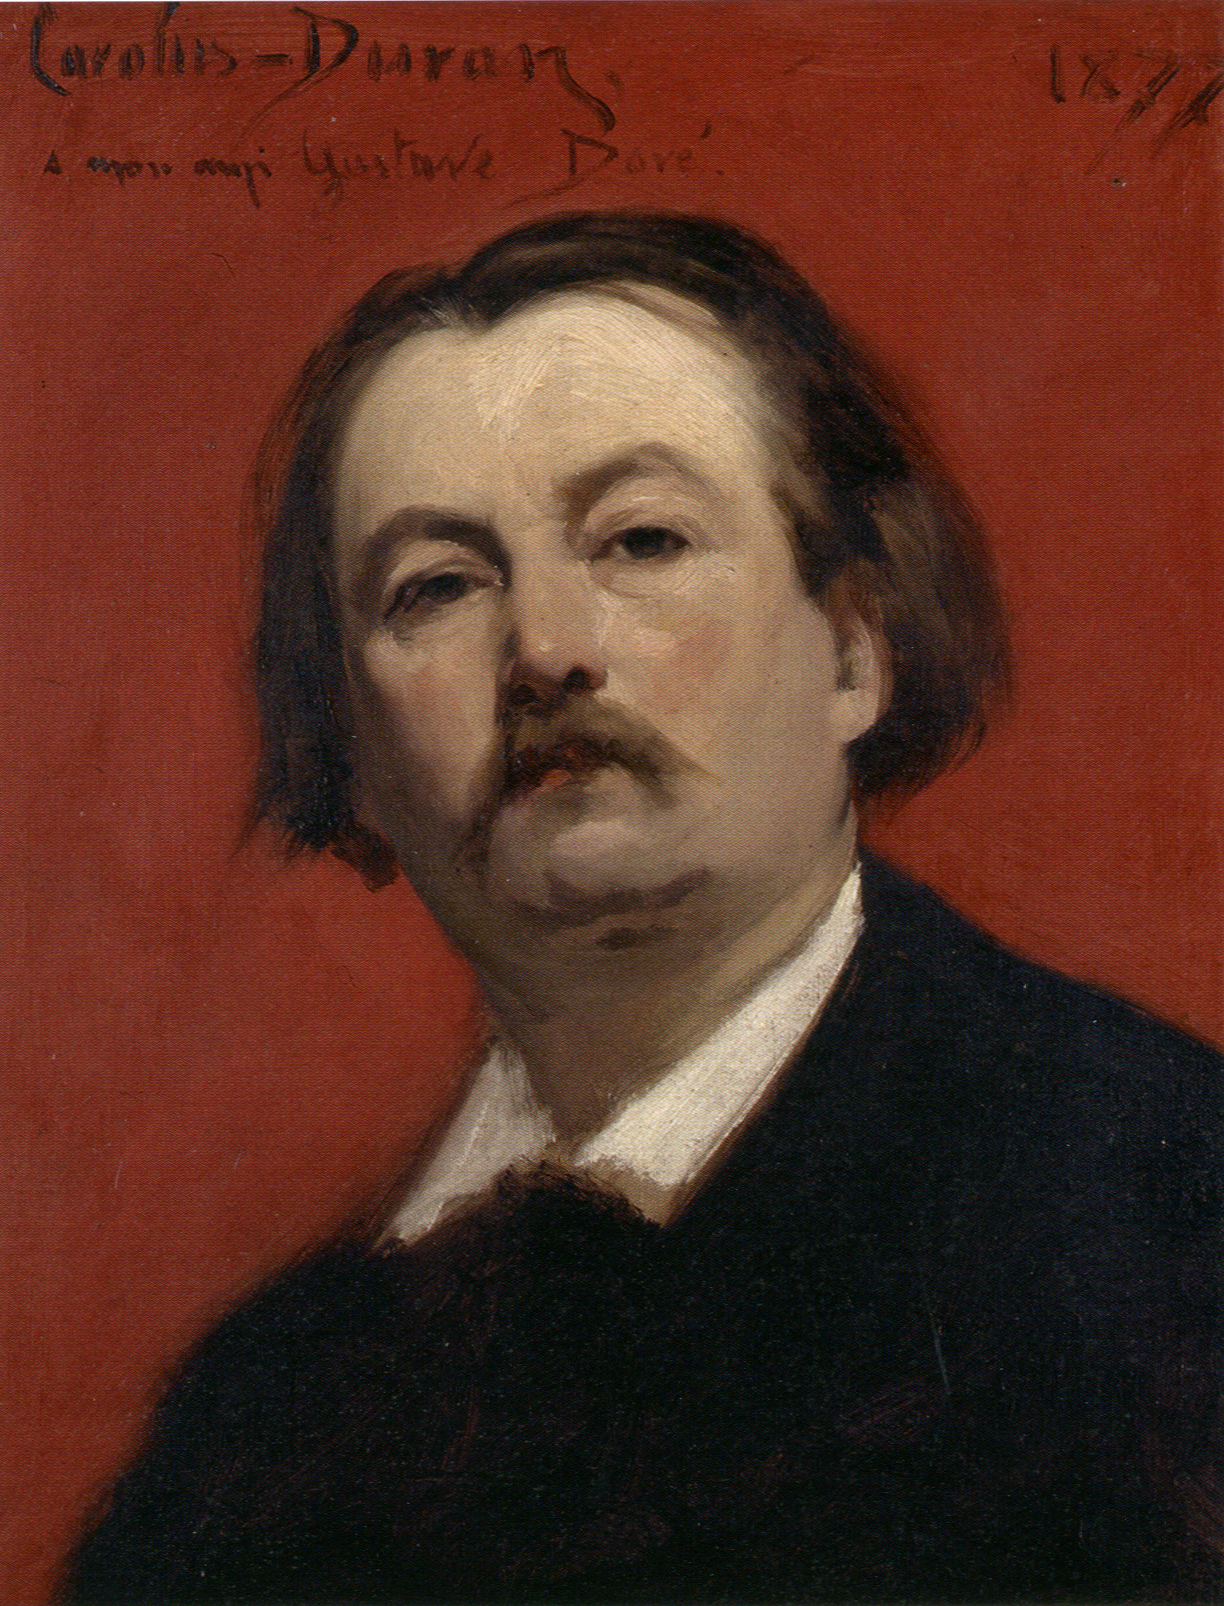 Gustave Doré - 6 janvier 1832 - 23 janvier 1883